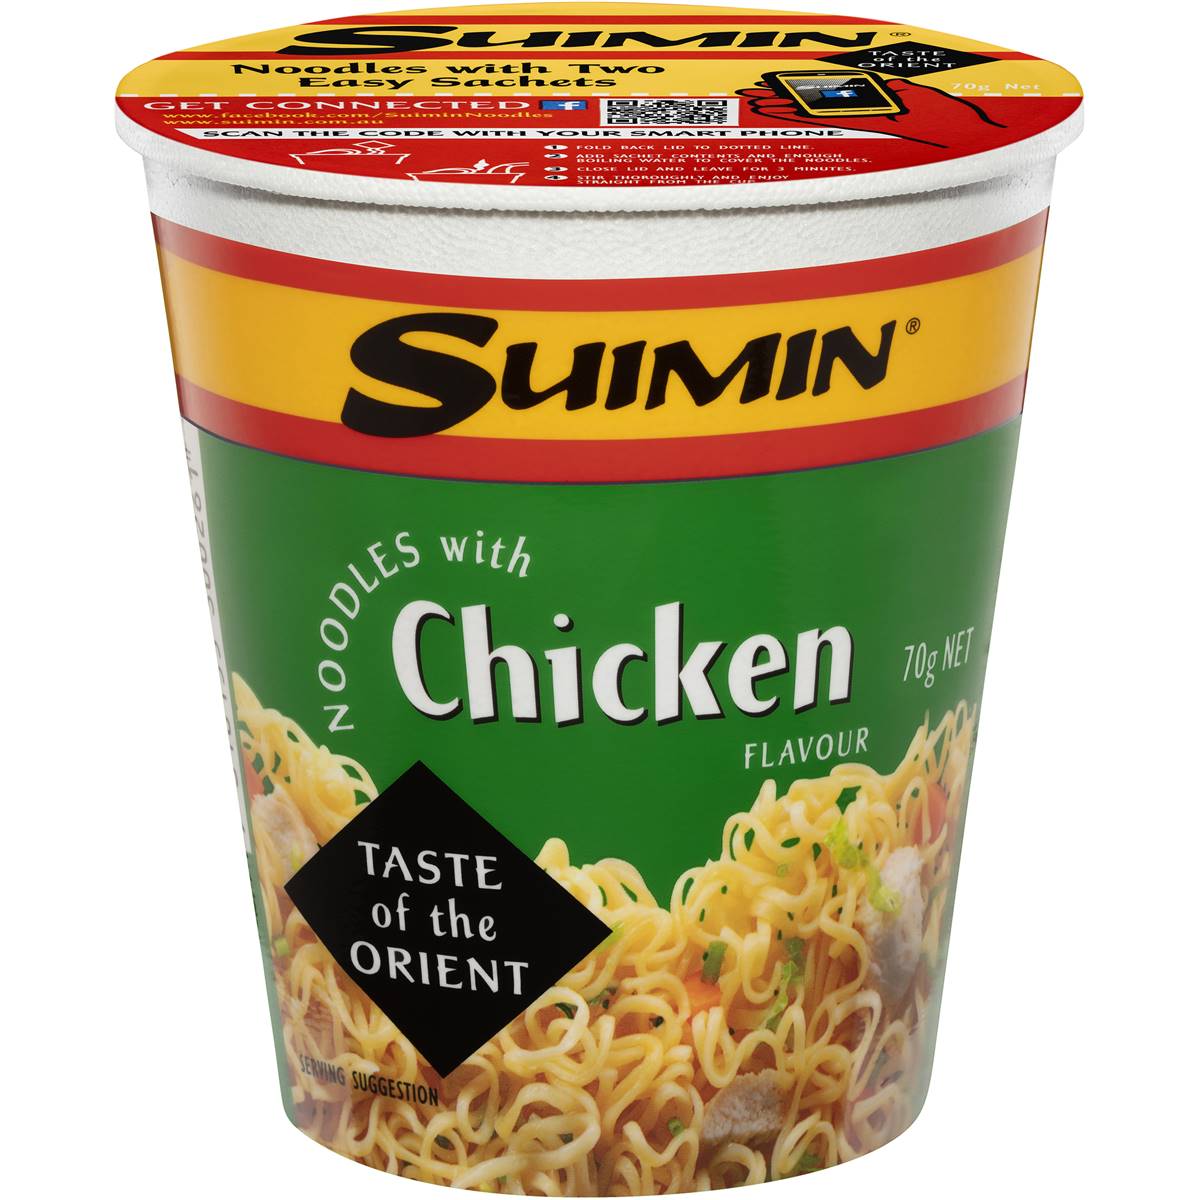 Suimin Chicken Noodle Cup